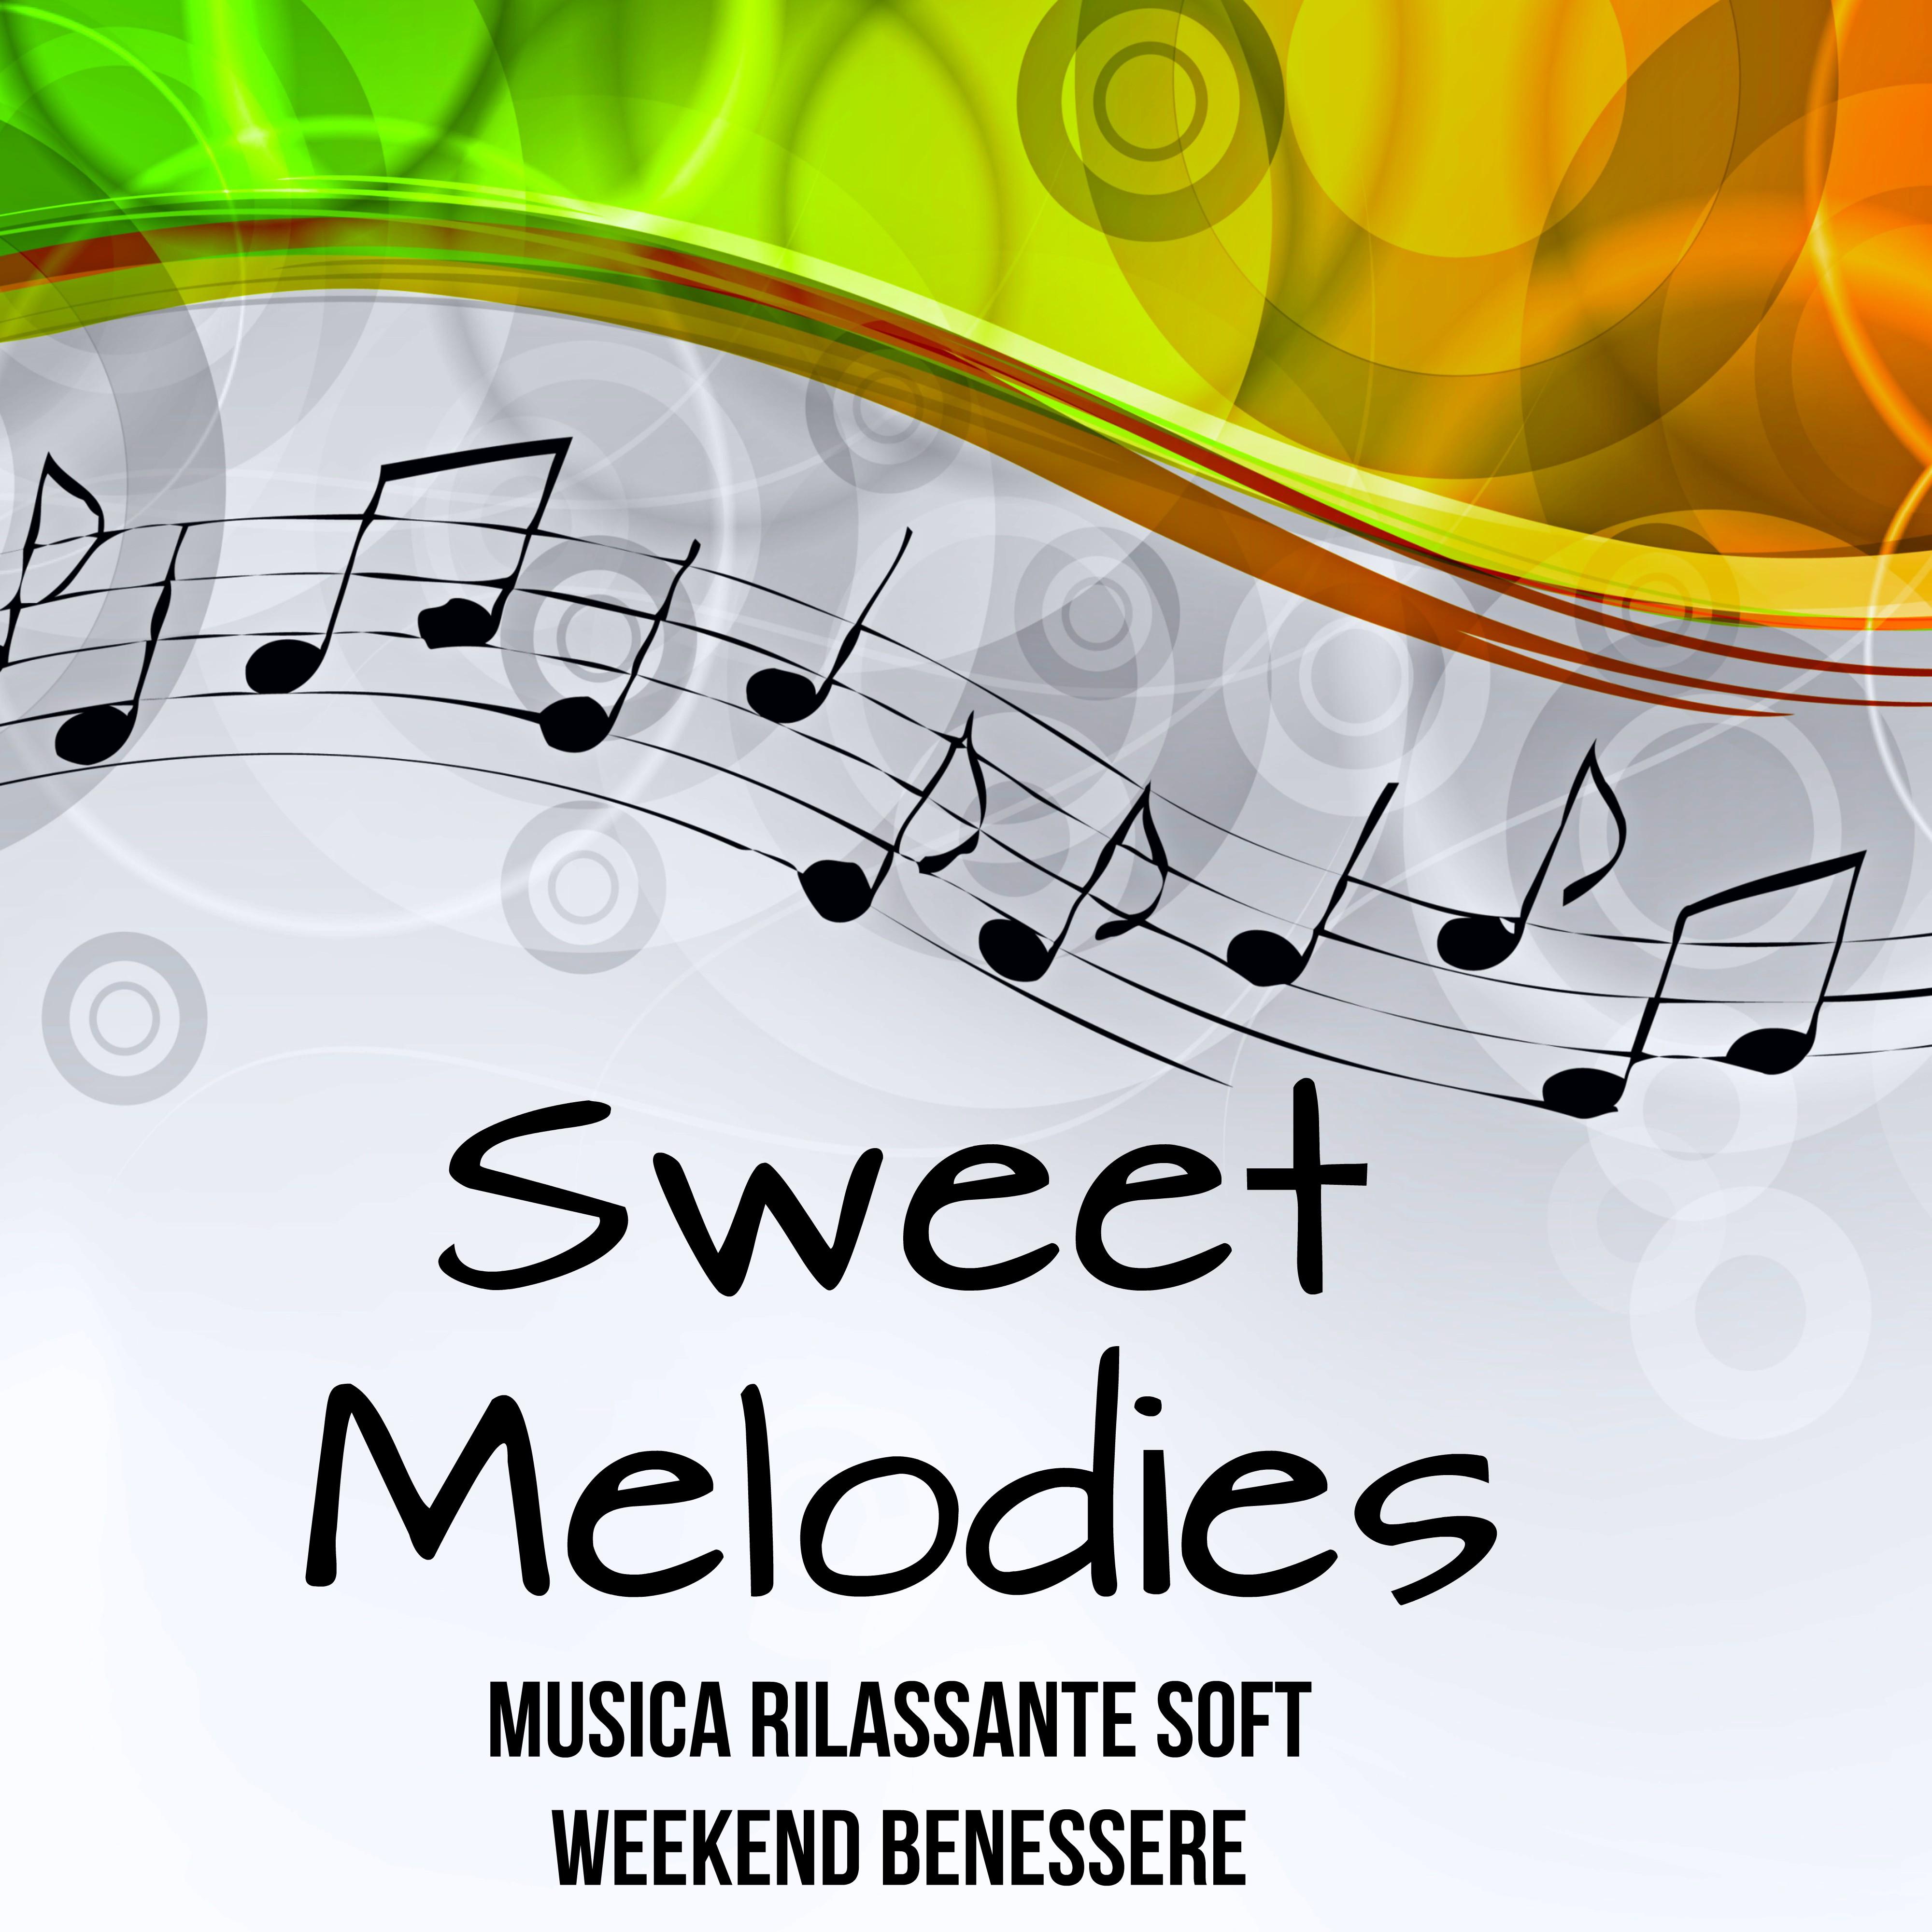 Sweet Melodies - Musica Rilassante Soft Weekend Benessere con Suoni Easy Listening Chill Strumentali